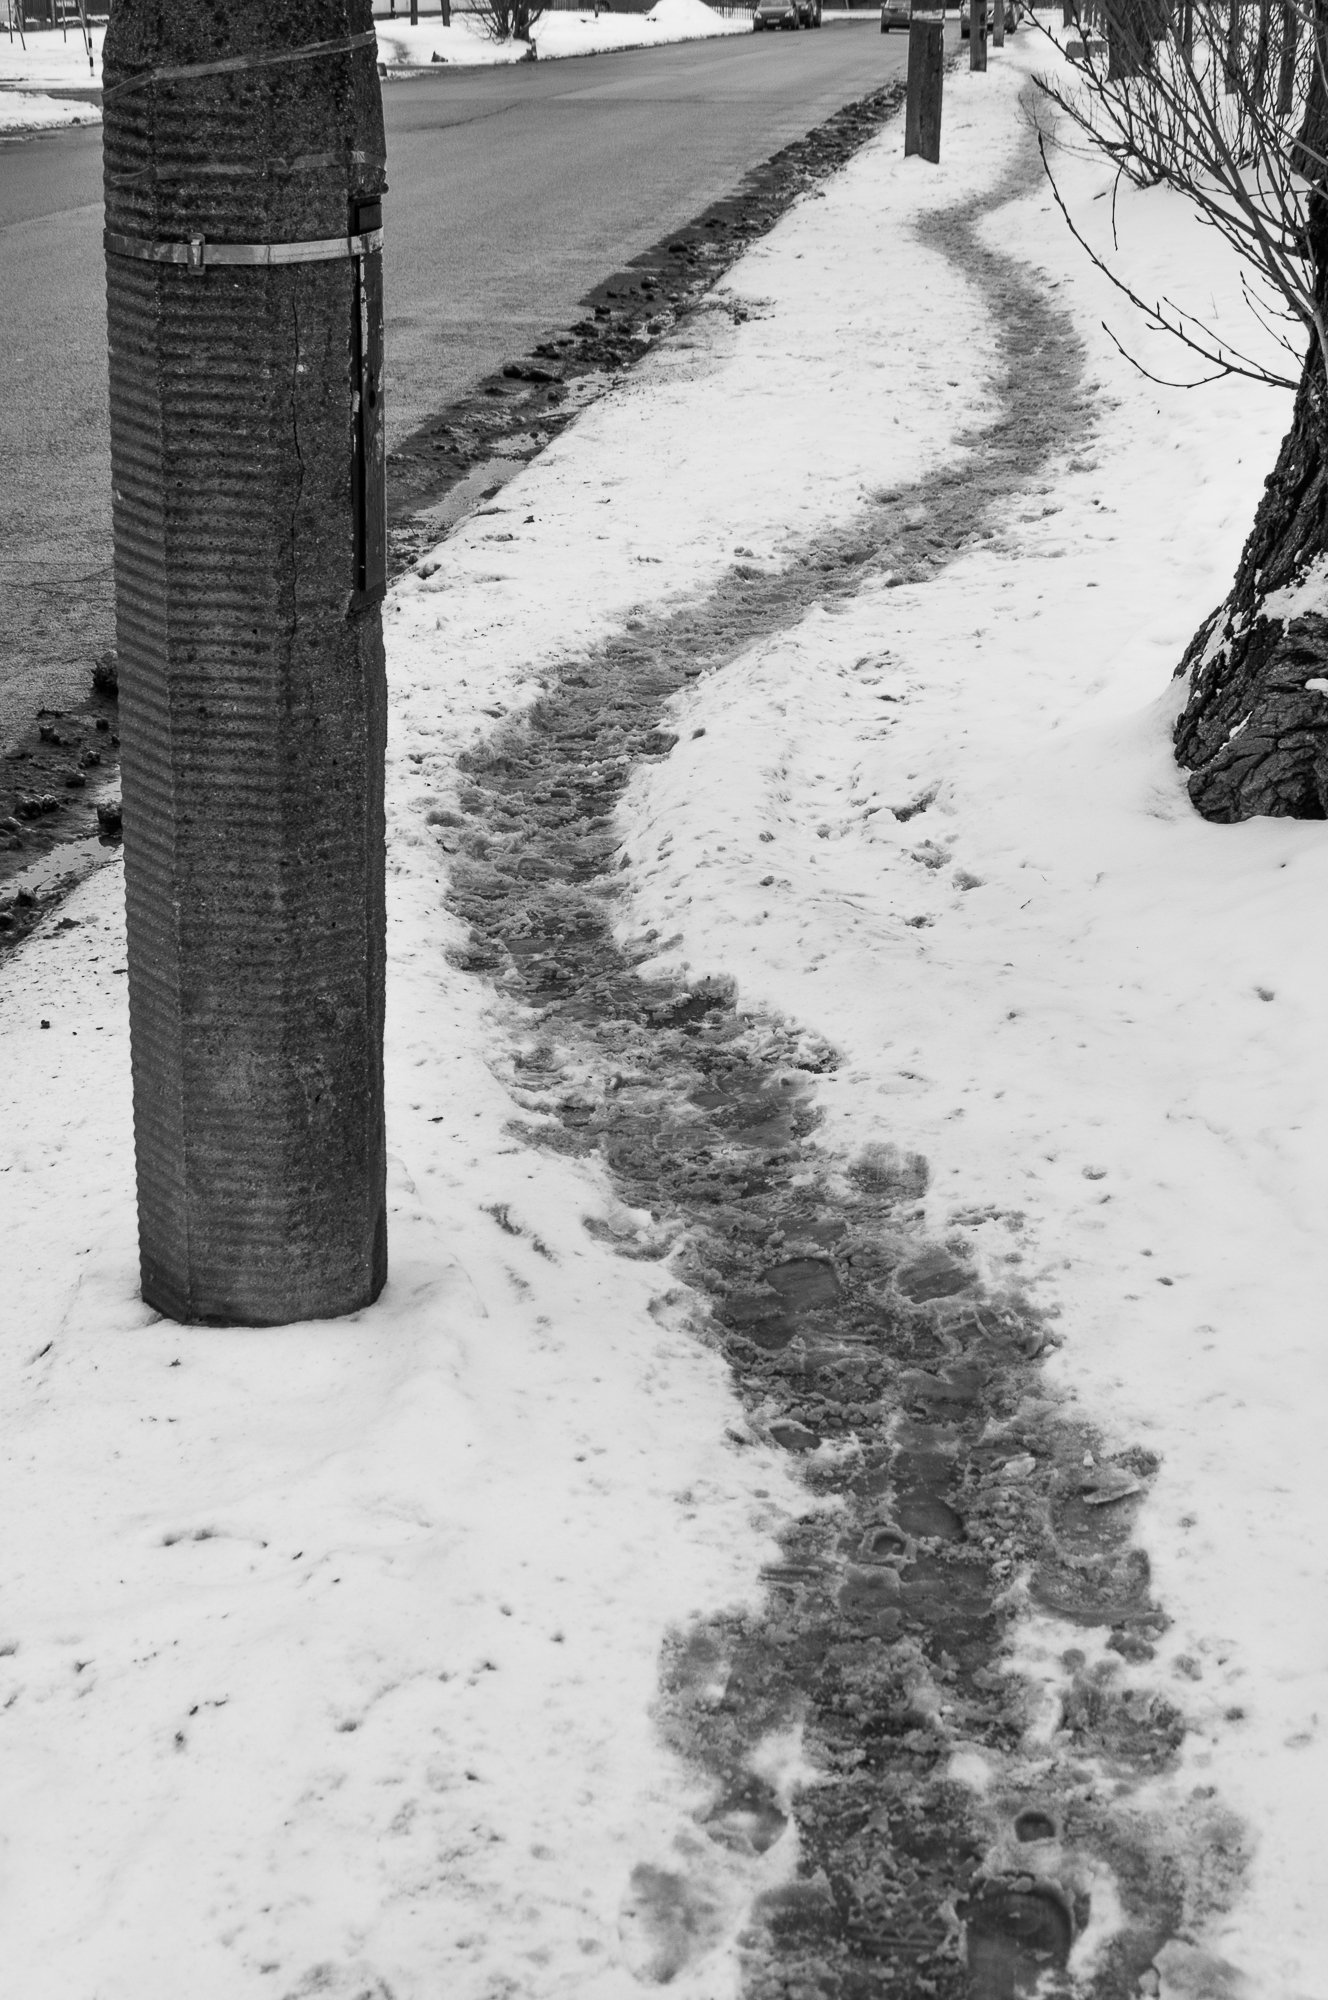 Adam Mazek Photography Warsaw (Warszawa) 2019. Post: "Another advantage of creating." Path in the snow. Minimalism. Portfolio: Minimalism, part XXVII.